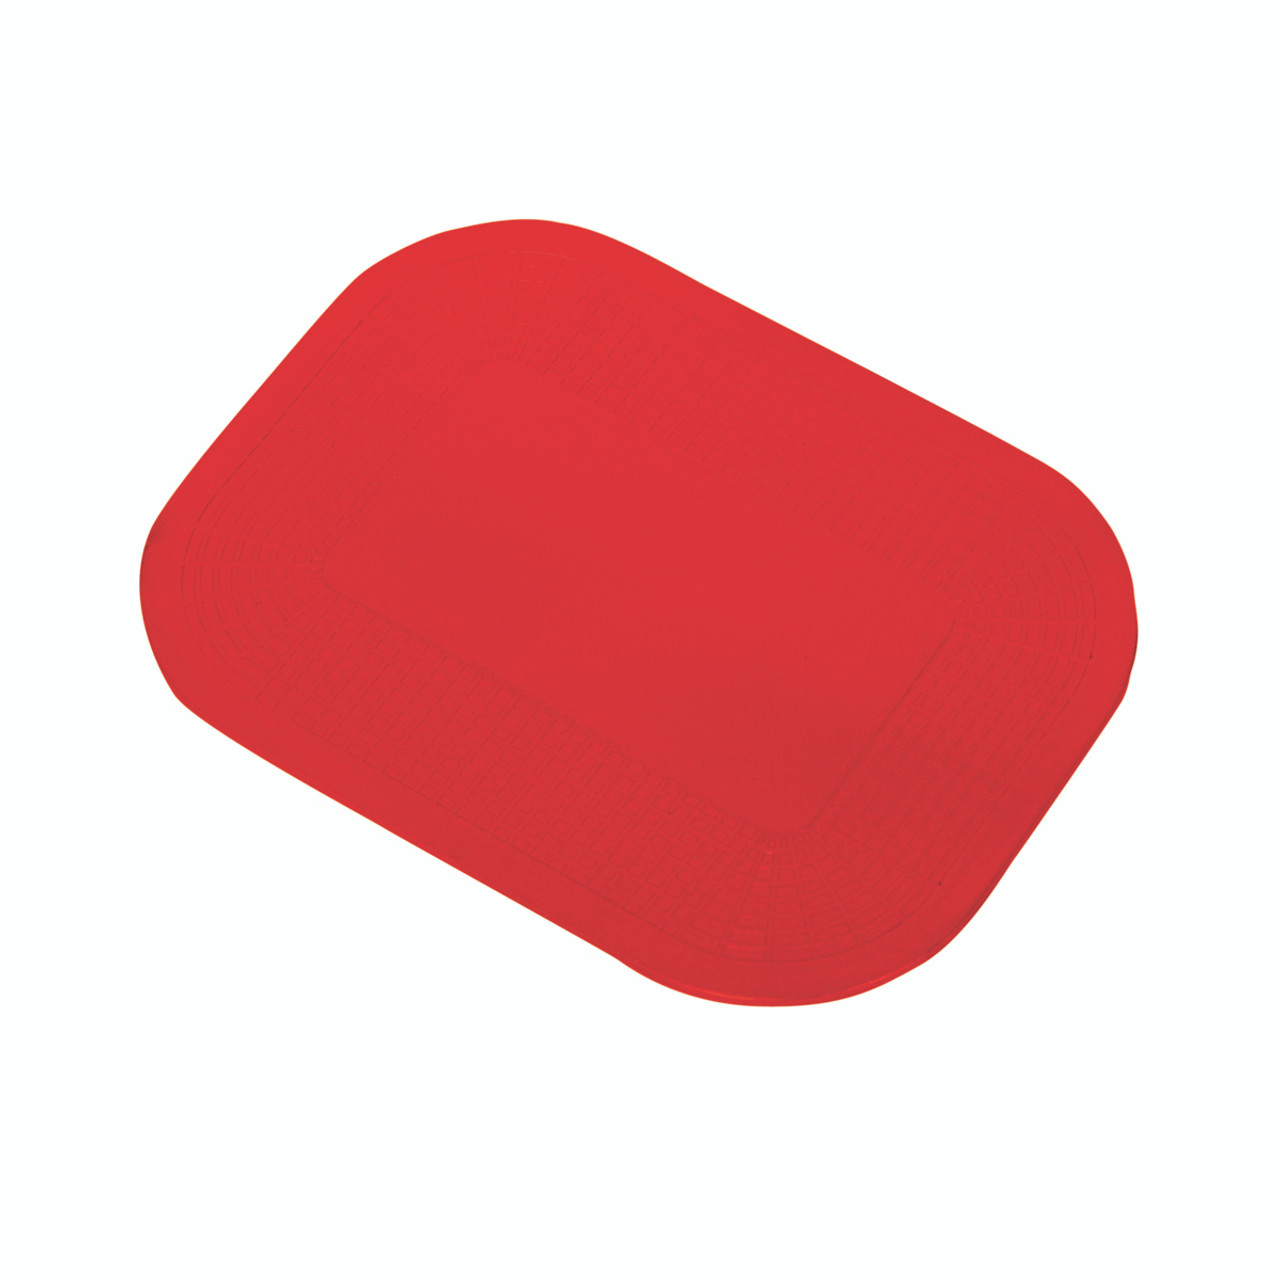 Dycem¨ non-slip rectangular pad, 15"x18", red